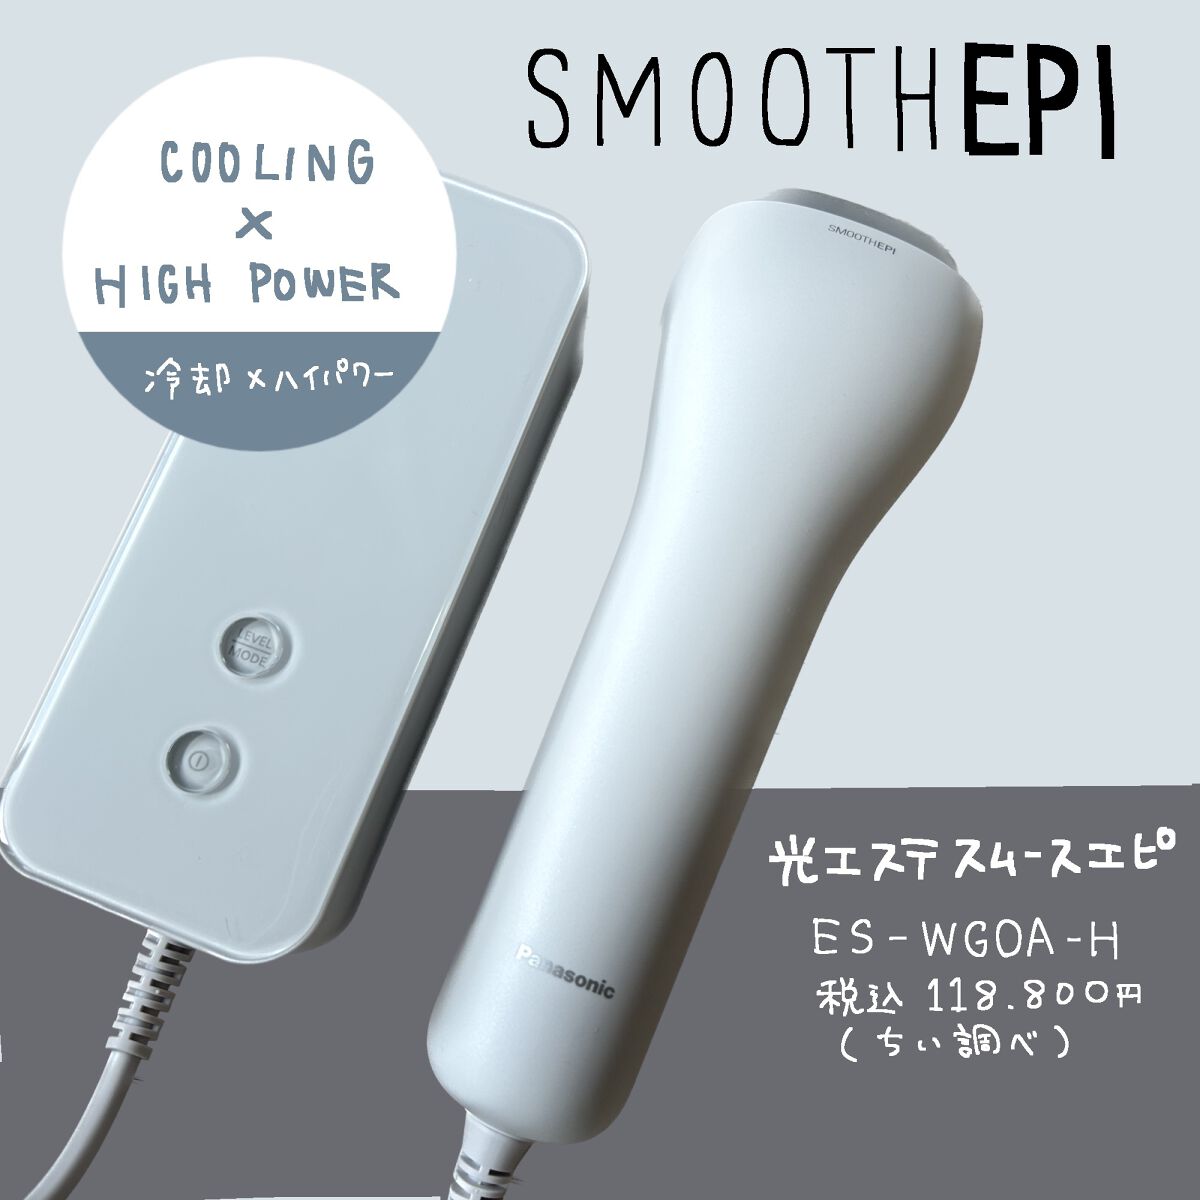 ES-WG0A-H  スムースエピ SMOOTHEPI Panasonic